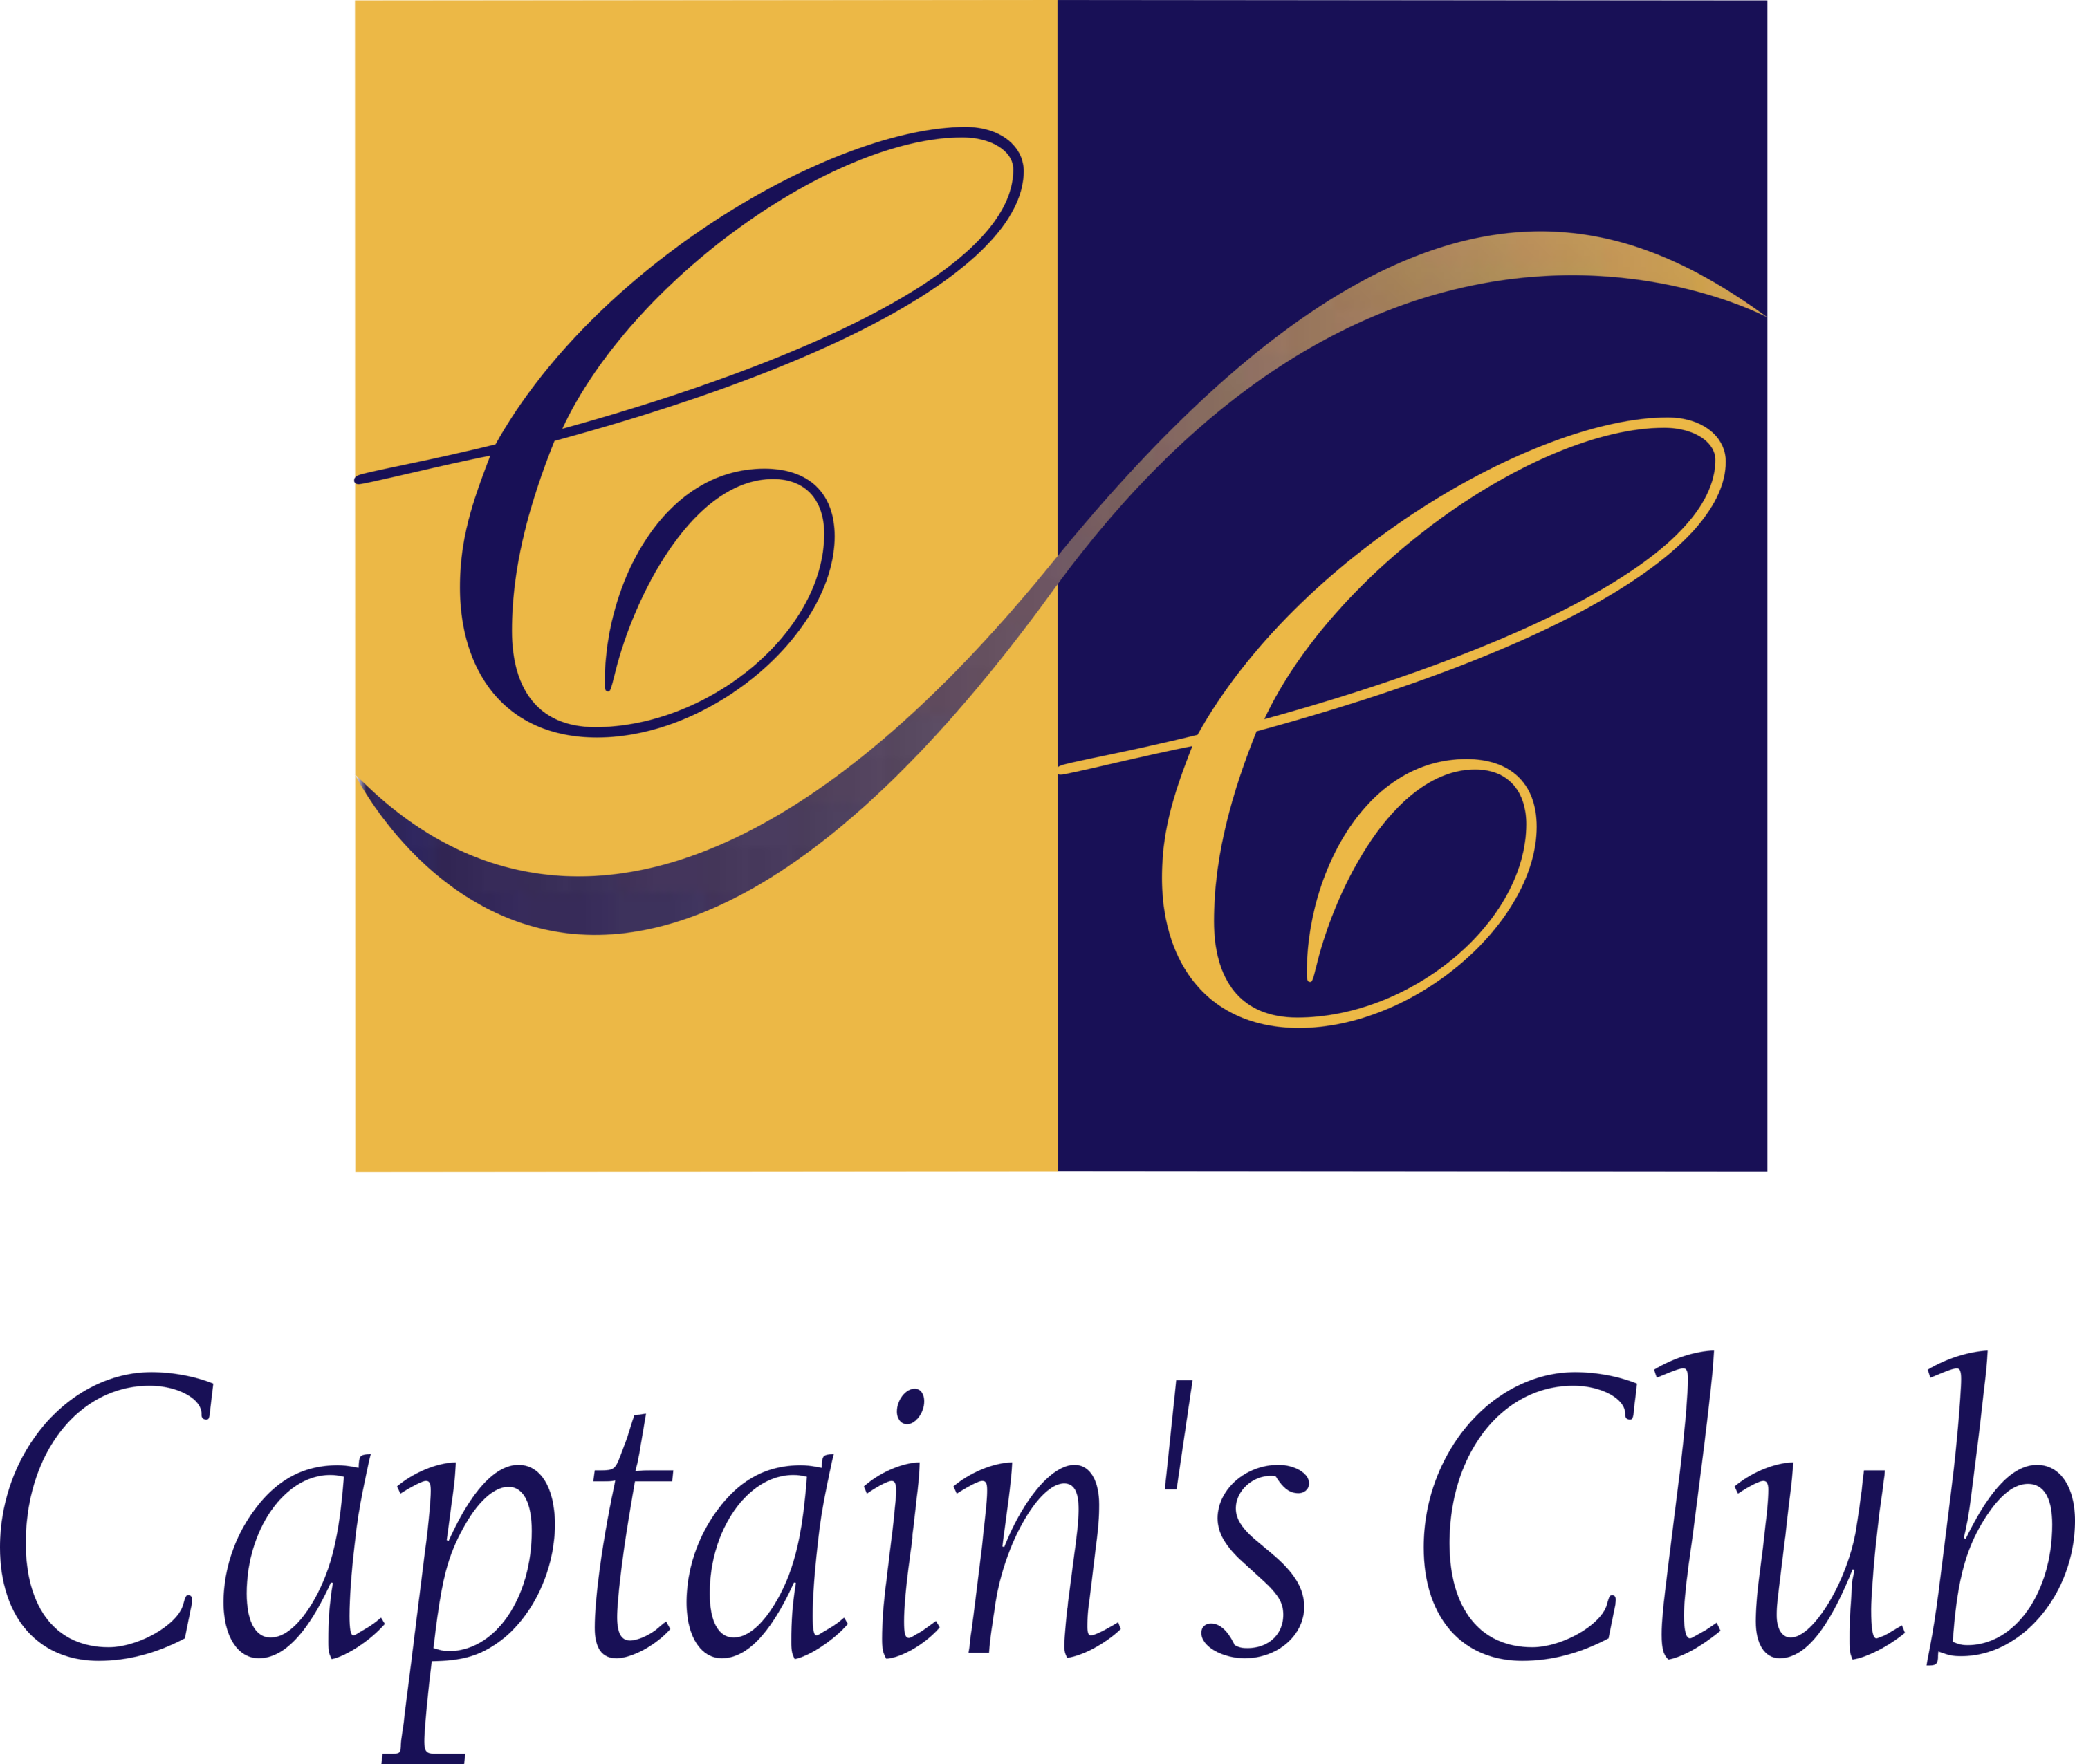 Captain's Club Logo